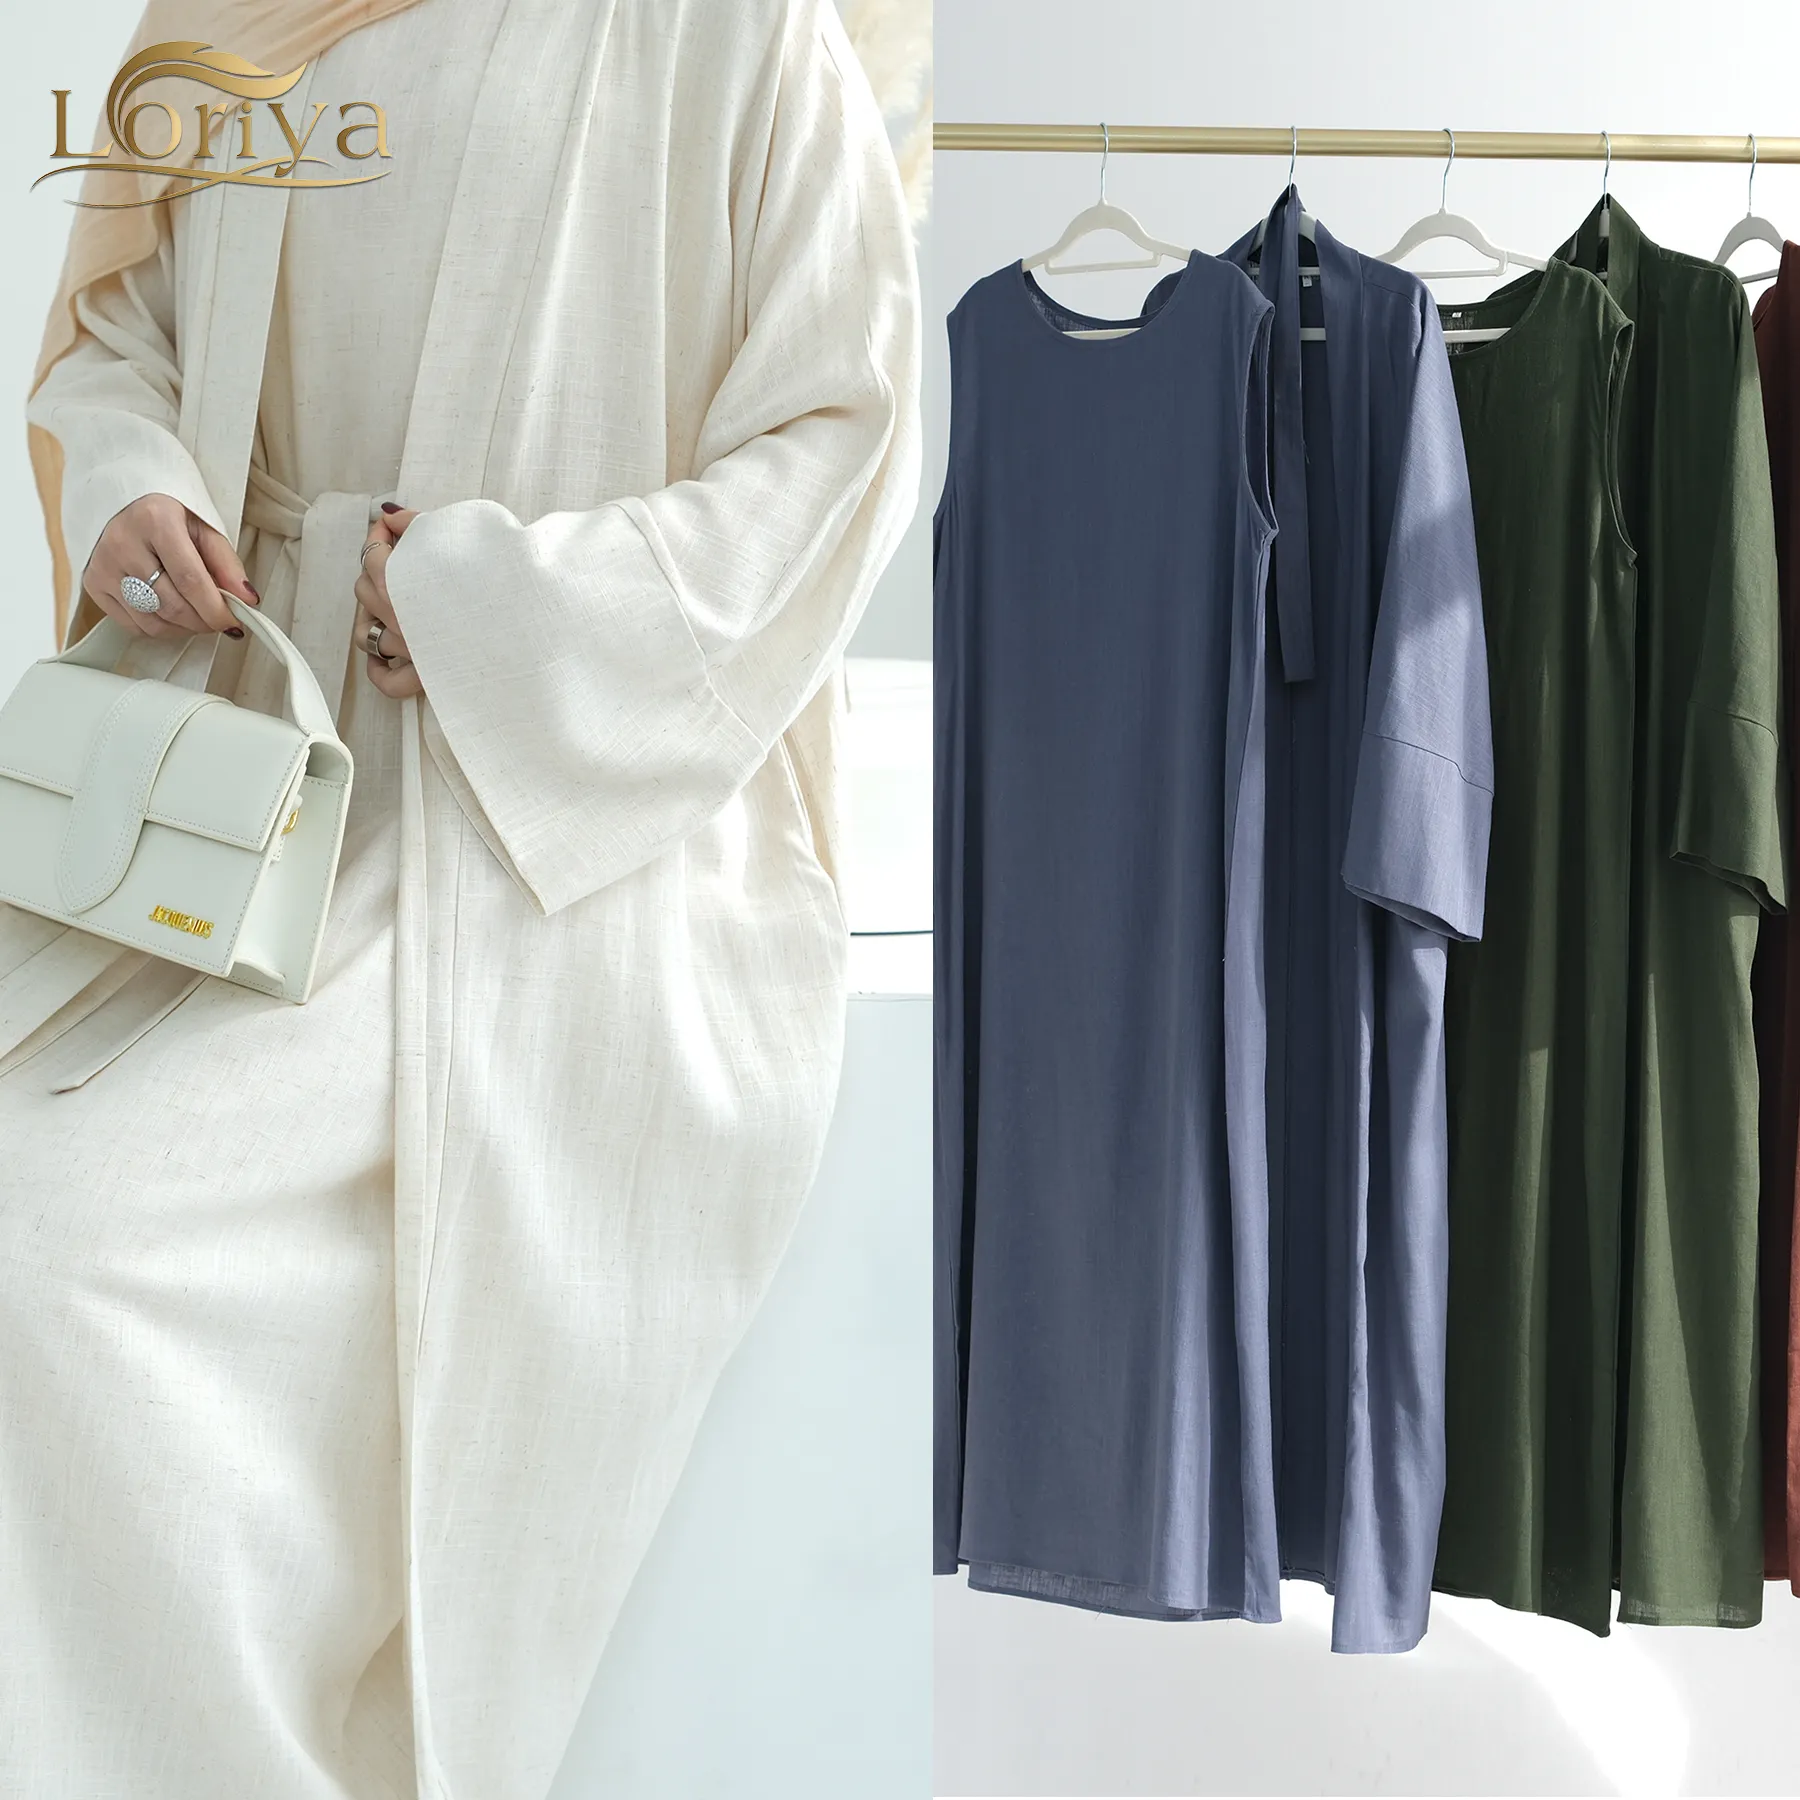 Loriya Abaya pakaian Islami baru Linen Premium sederhana 2 bagian Set Abaya gaun Muslim Wanita Koleksi Lebaran Turki